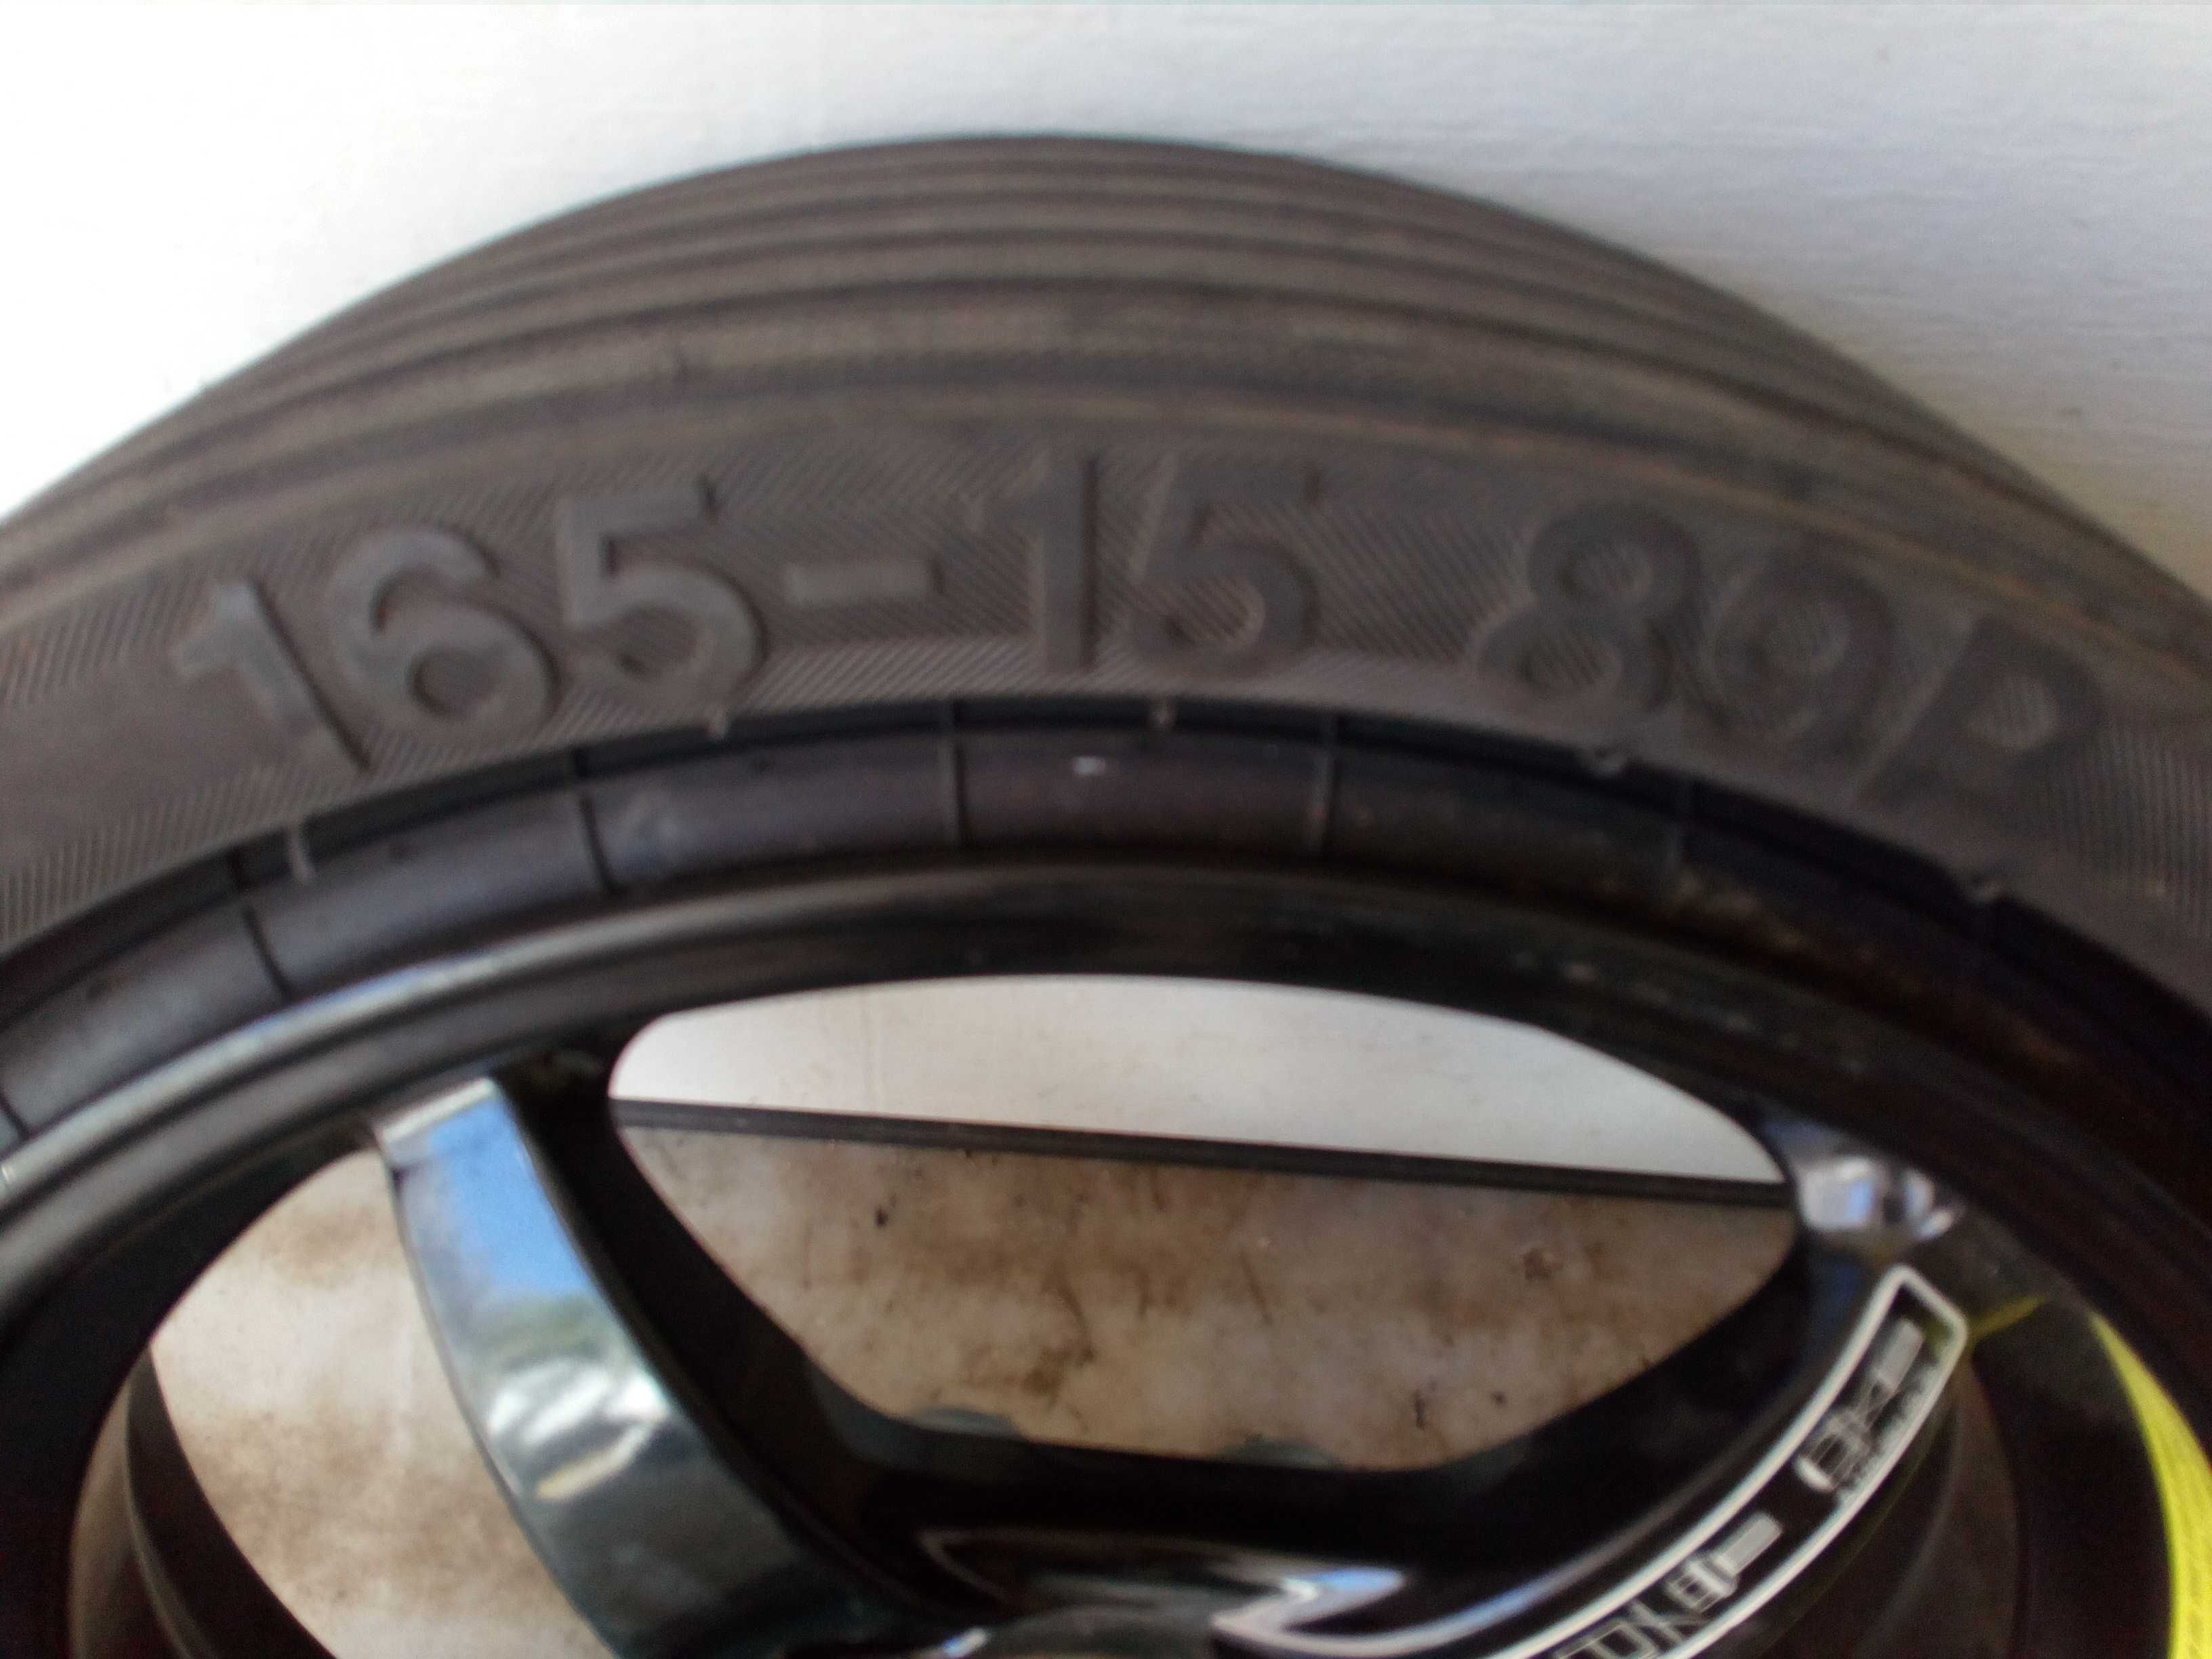 Roda suplente 15" 5x112 Mercedes SLK CLK coupe pneu de encher classe